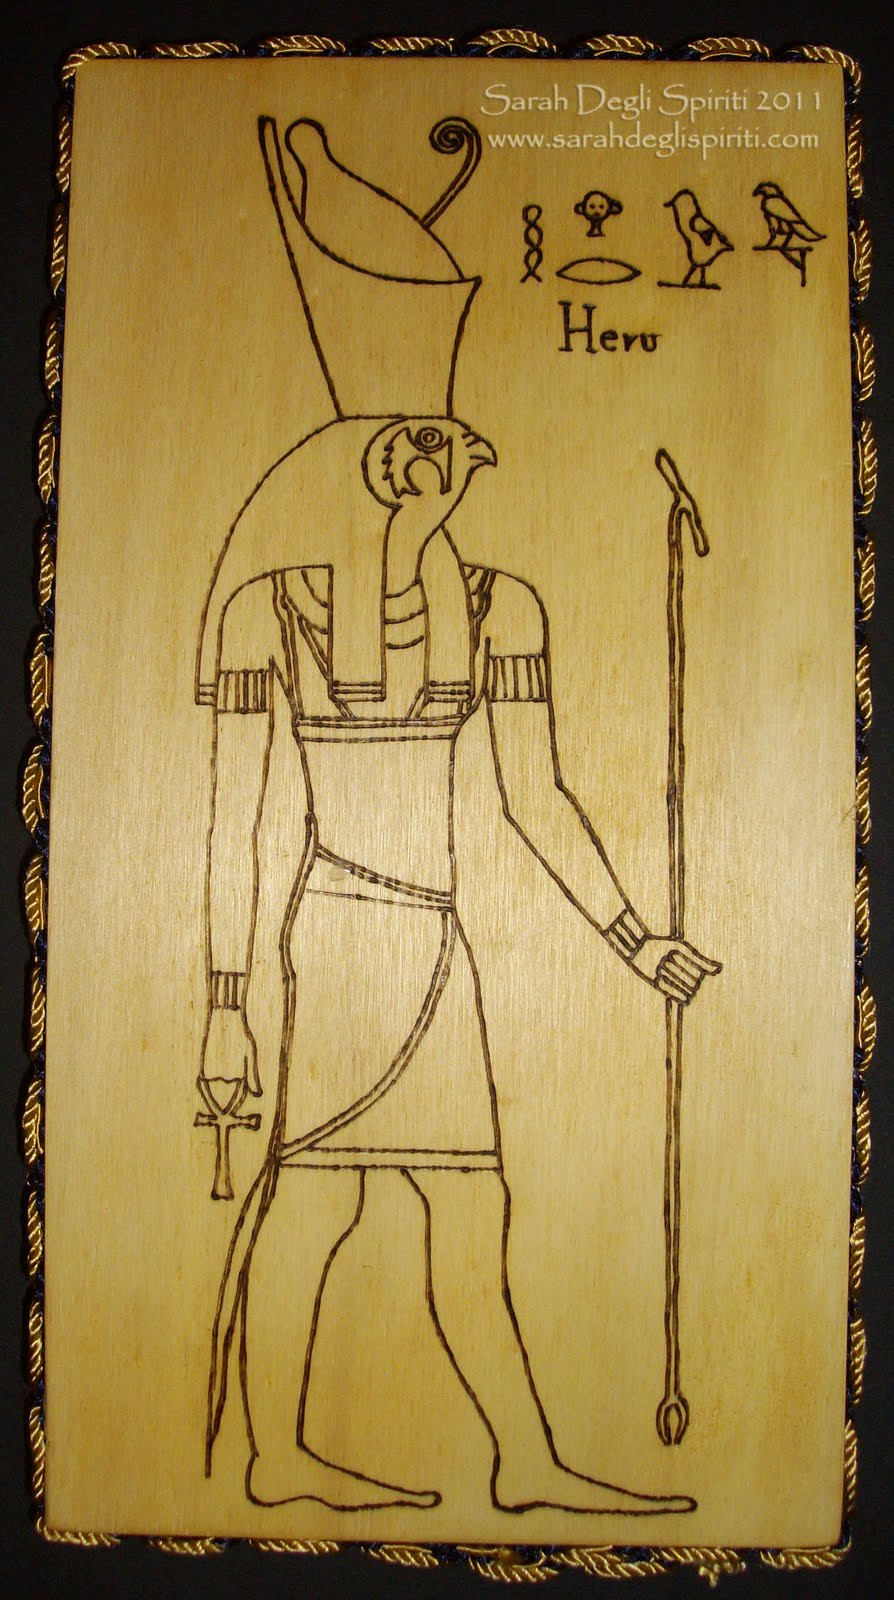 Heru/Horus